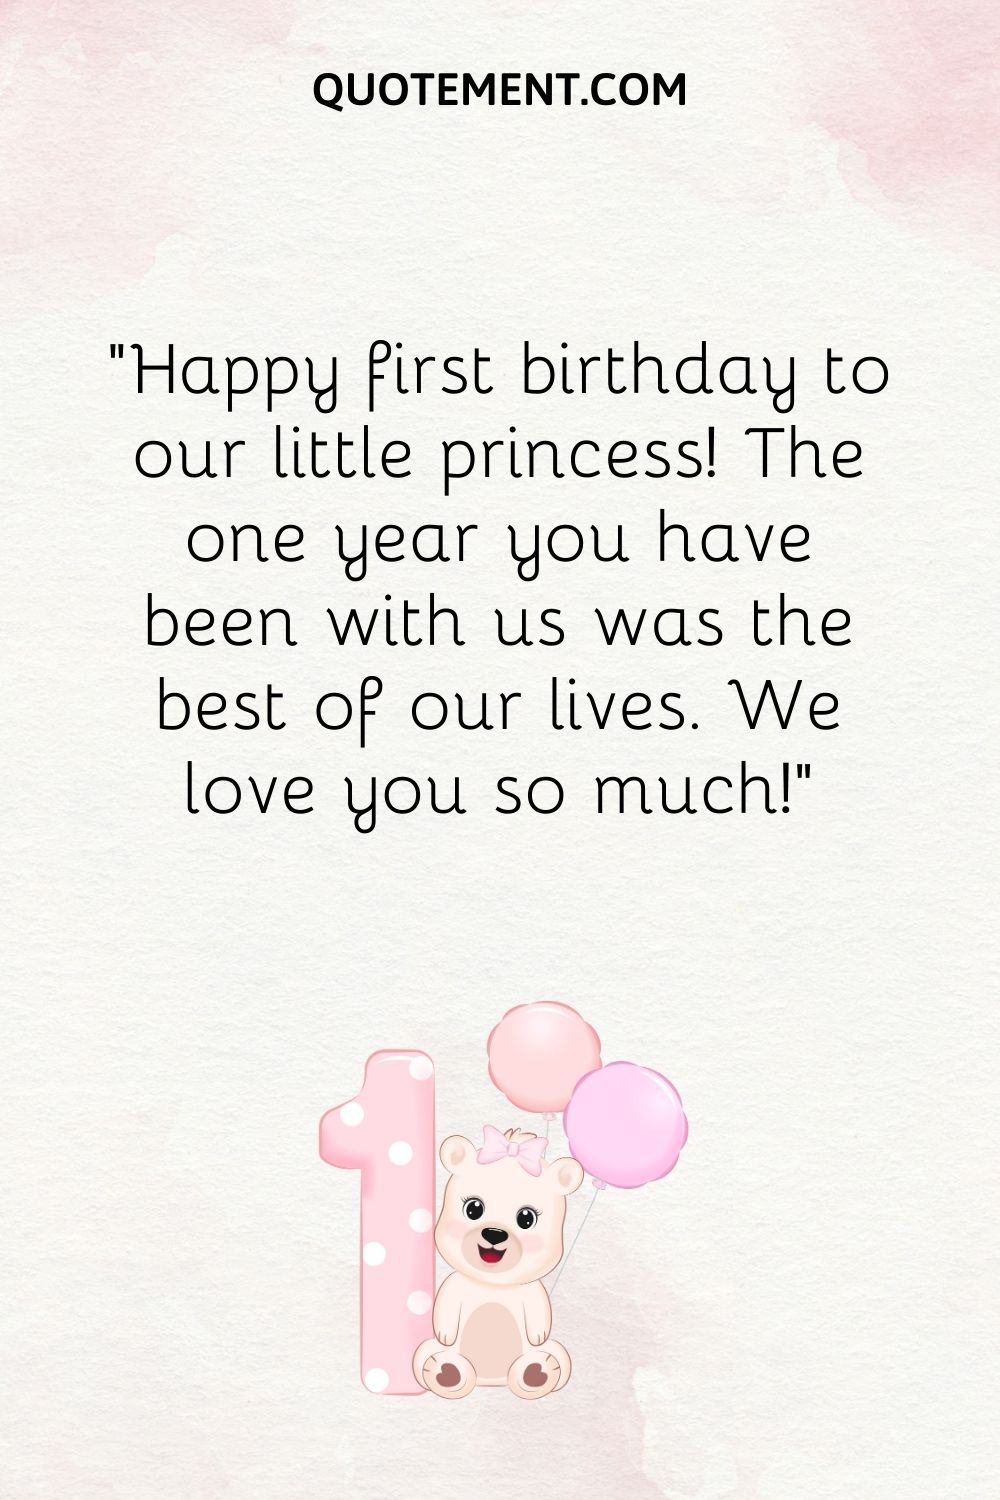 teddy bear image representing happy birthday baby girl wish